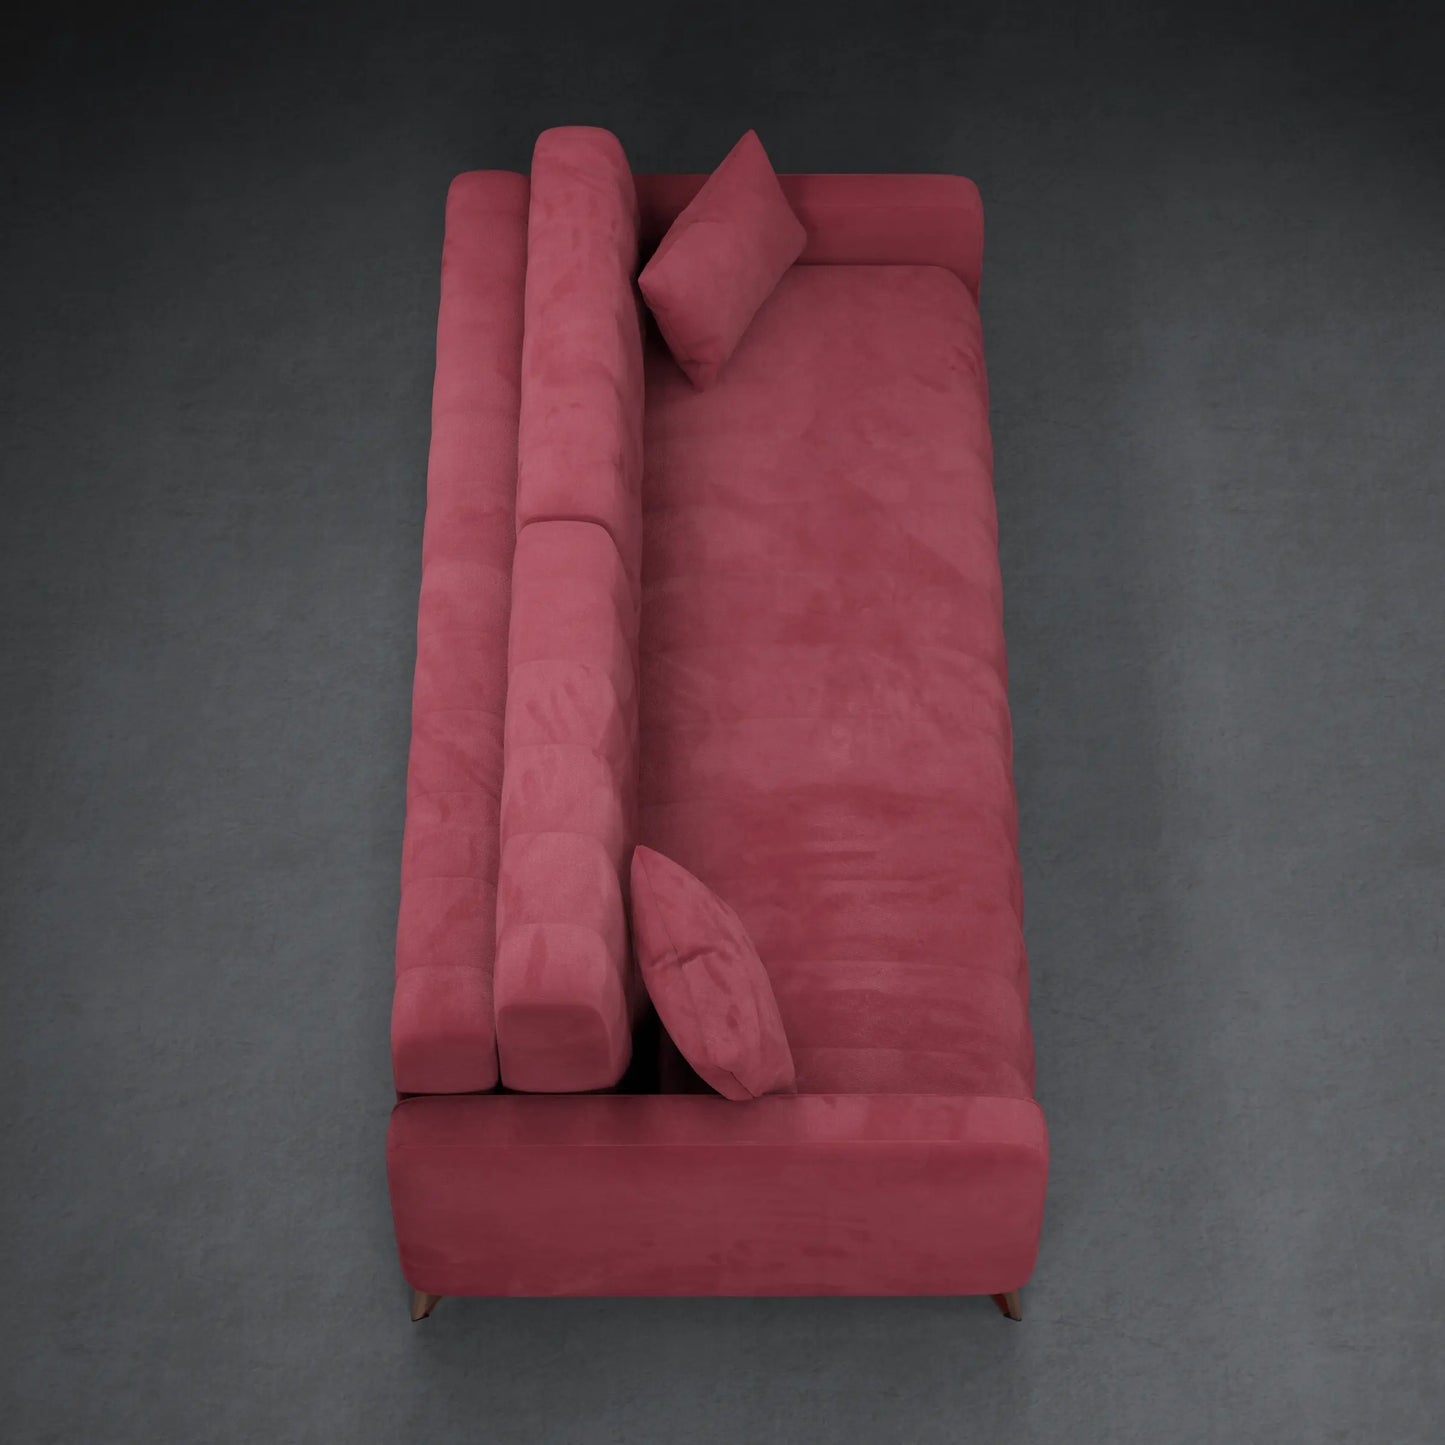 JANE - 3 Seater Tuxedo Couch in Velvet Finish | Maroon Color